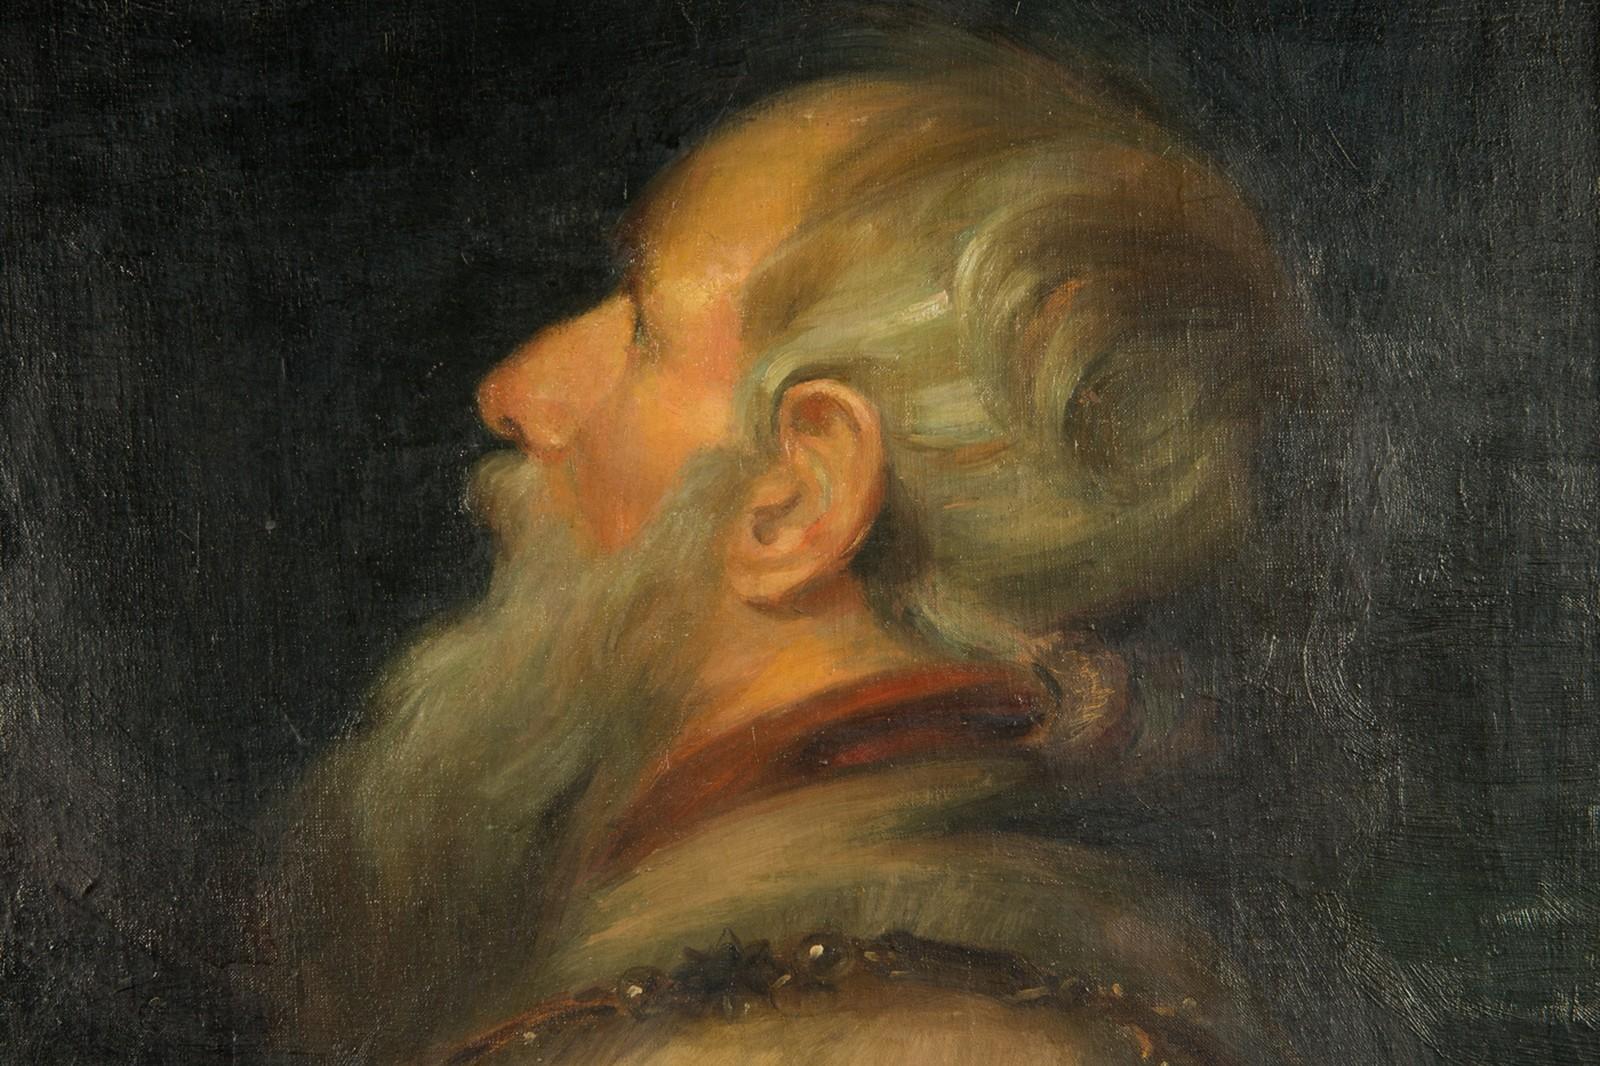 Unbekannter Künstler, Gemälde, Öl auf Leinwand, nach Peter Paul Rubens 